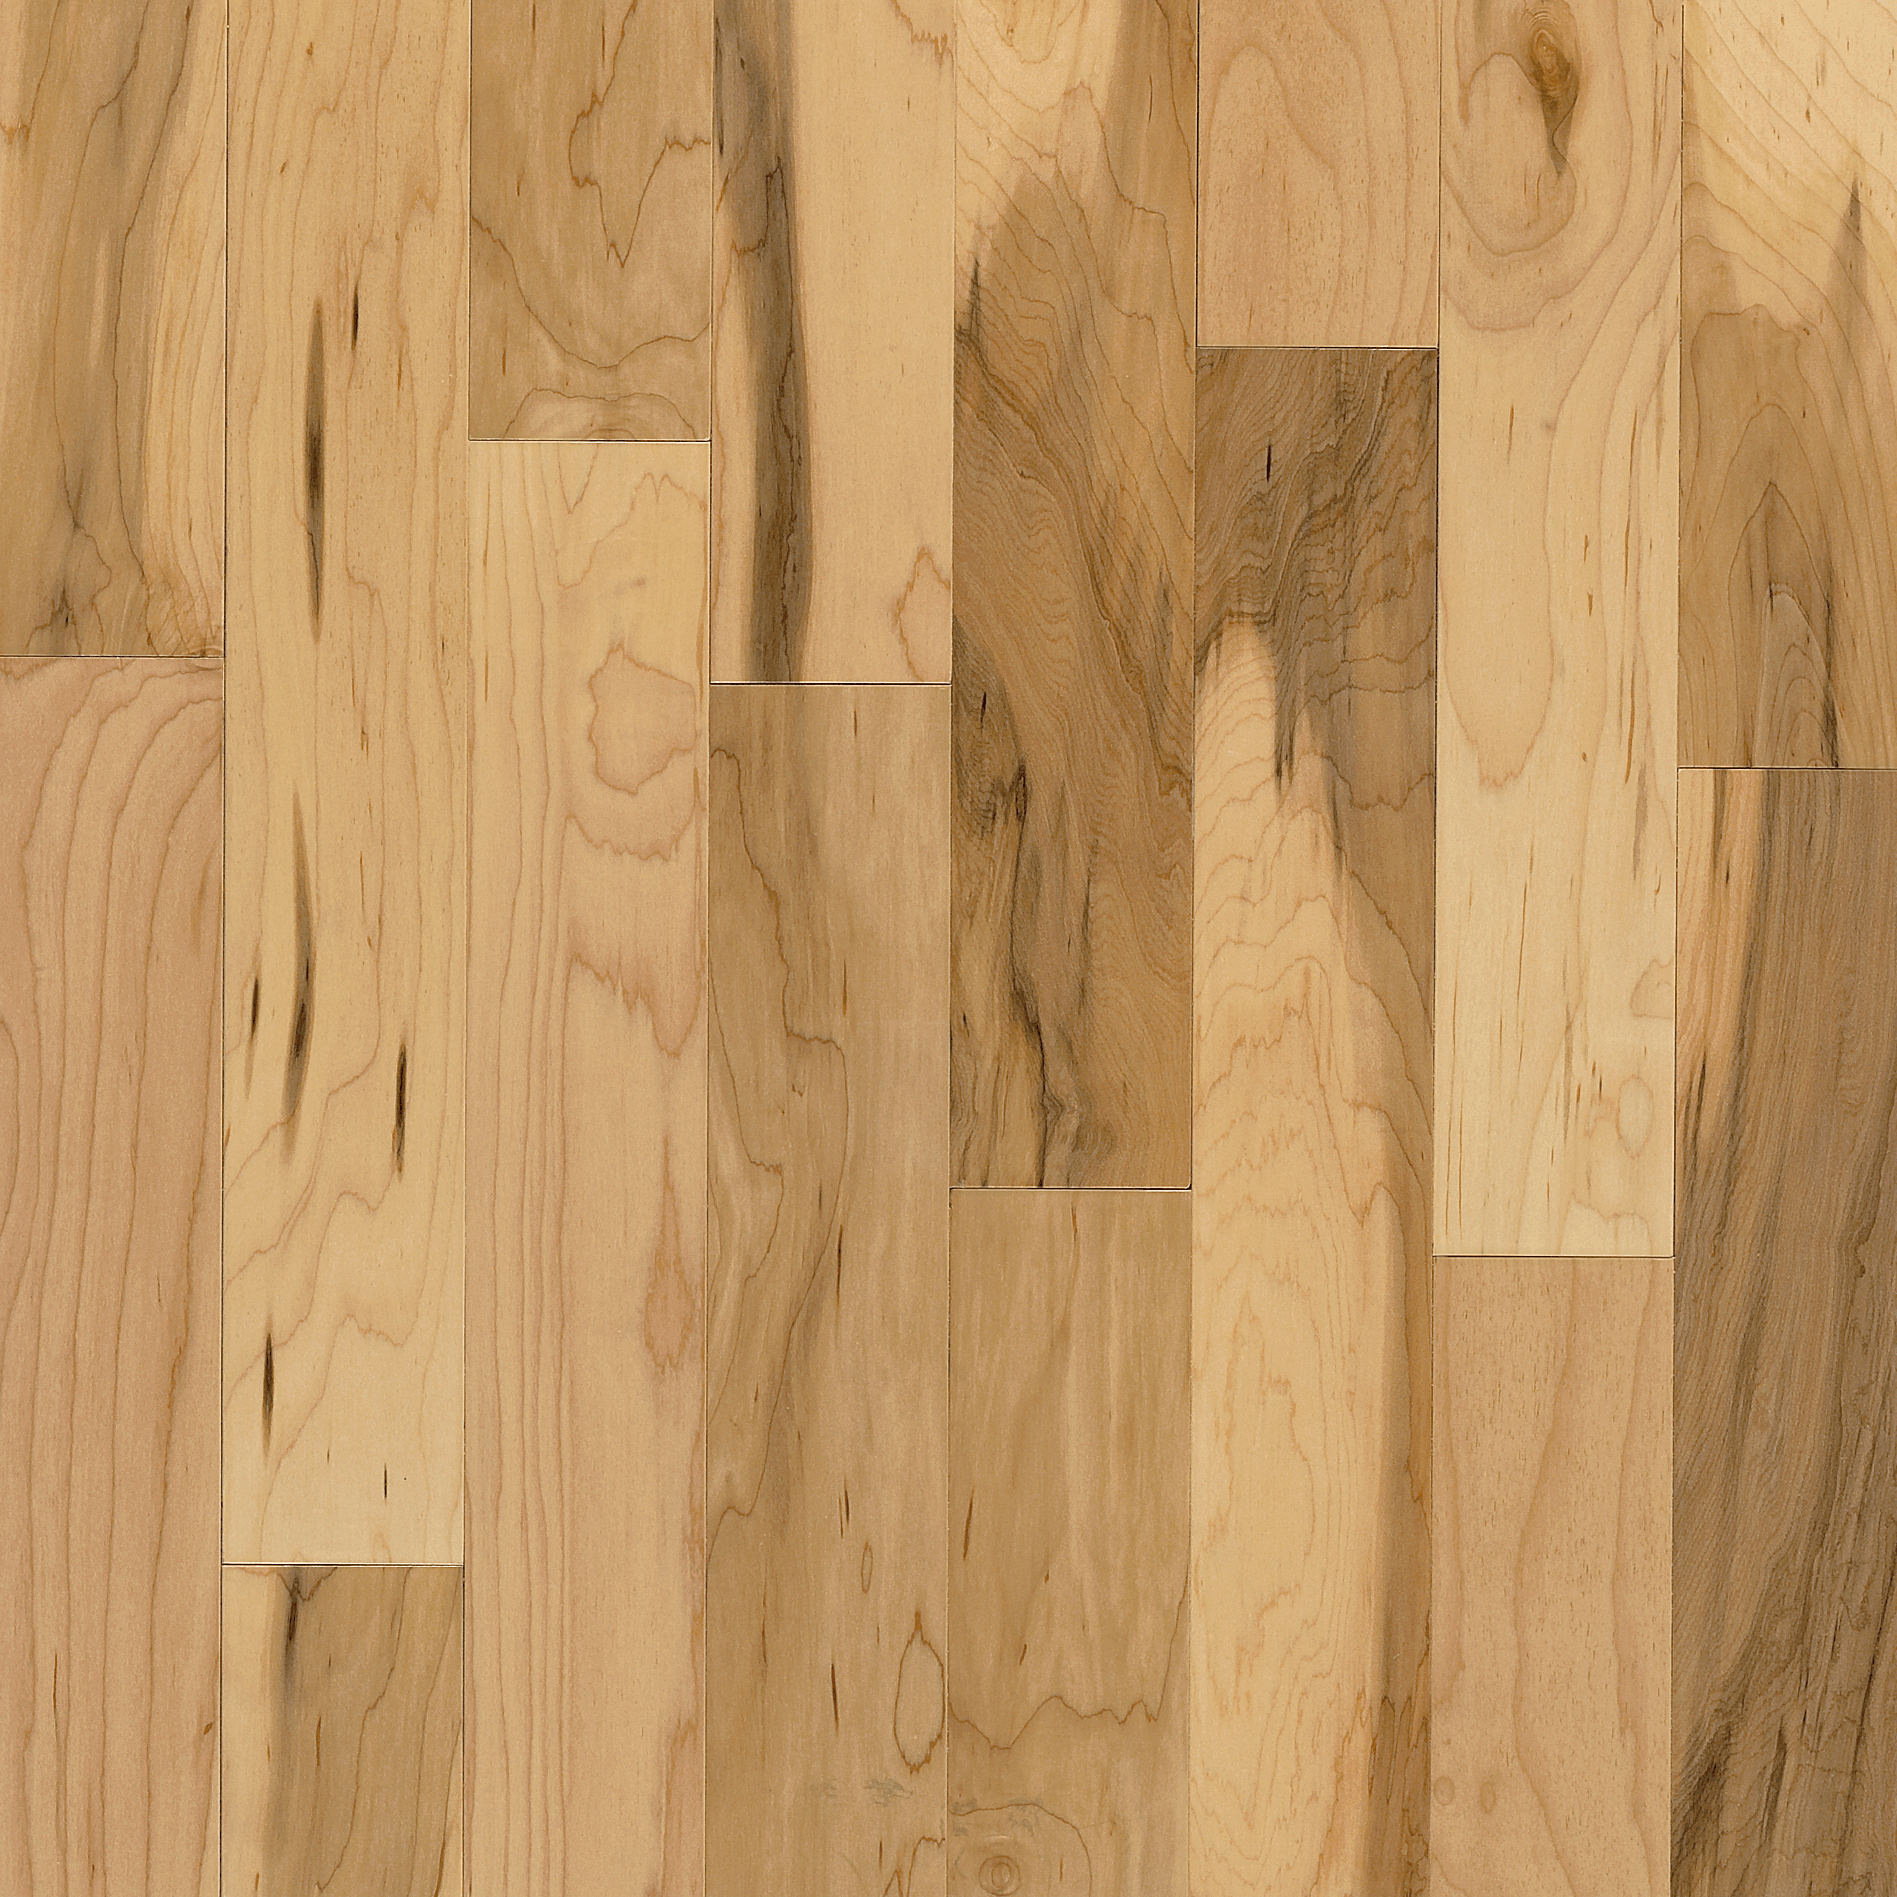 Maple Hardwood Flooring in Rockville from Alladin Carpet and Floors